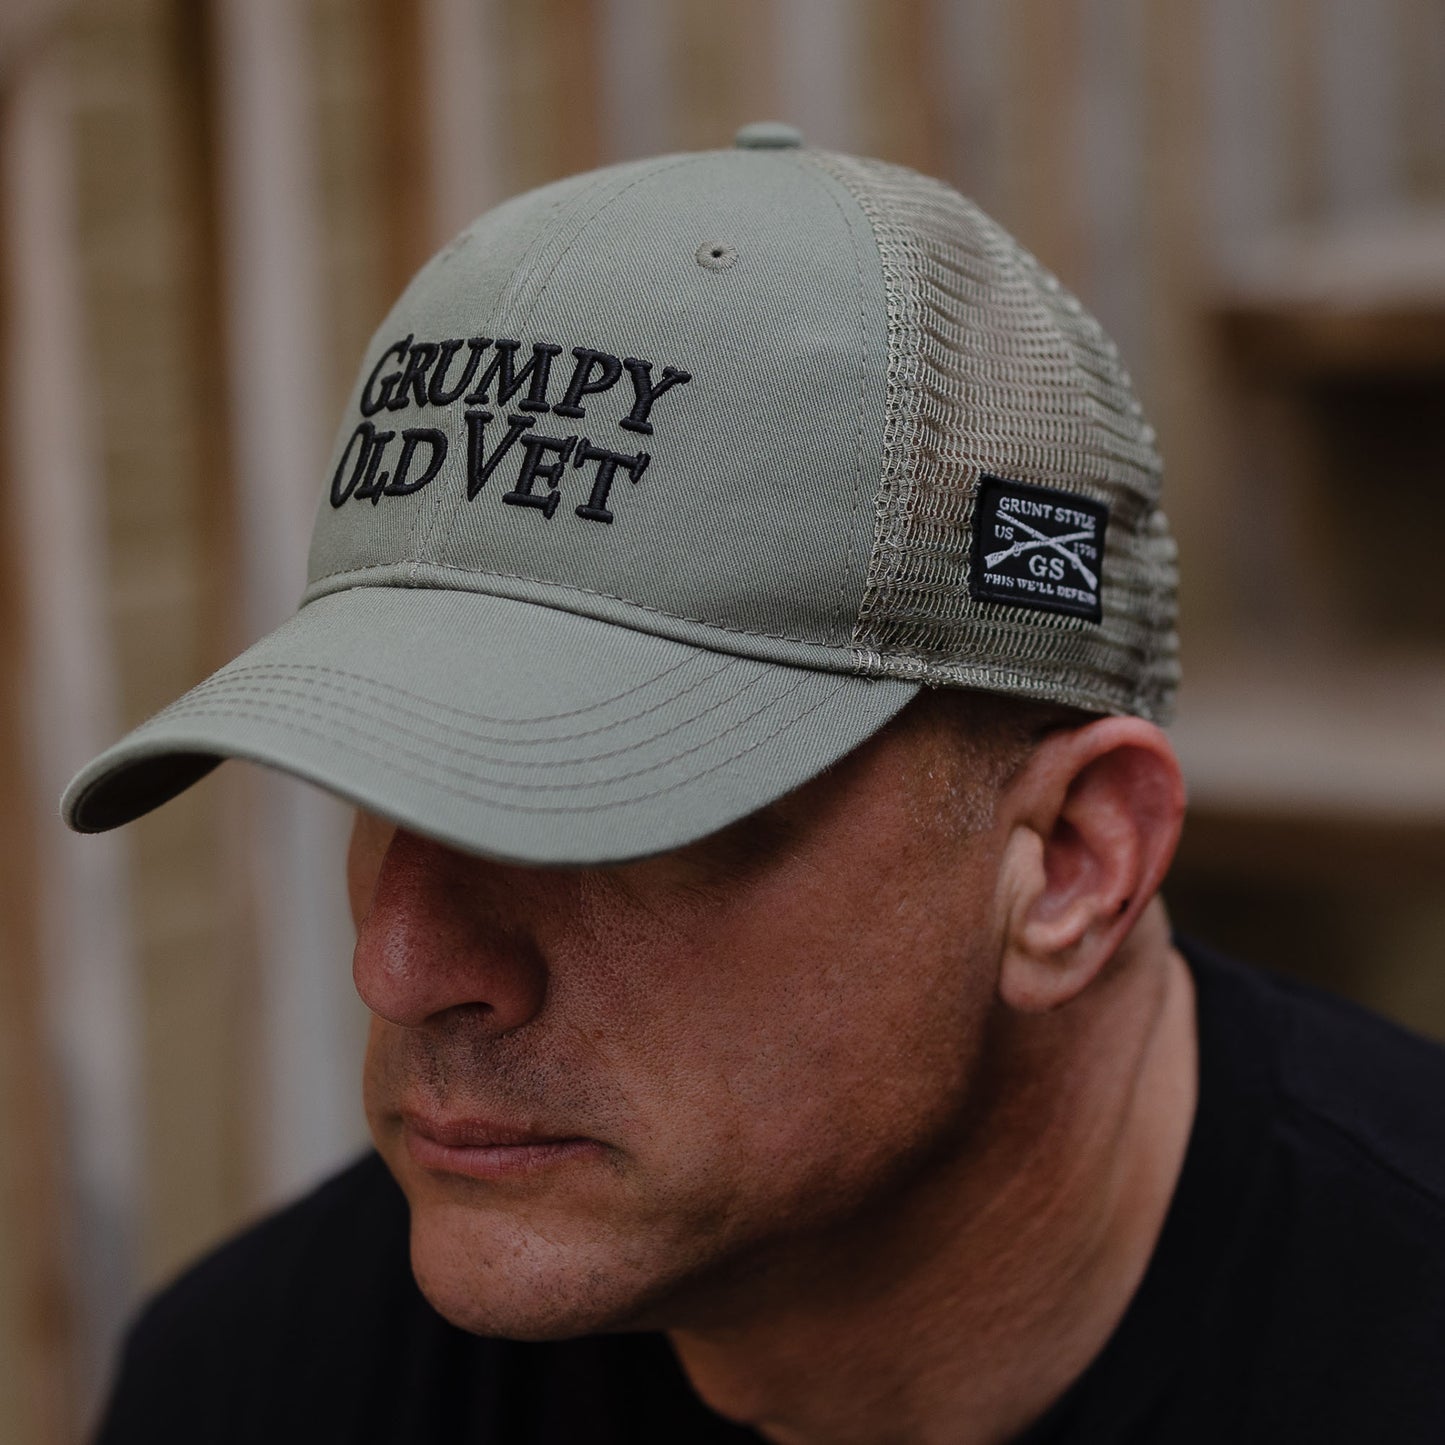 Grumpy Old Veteran Hat - Gifts for Veterans 